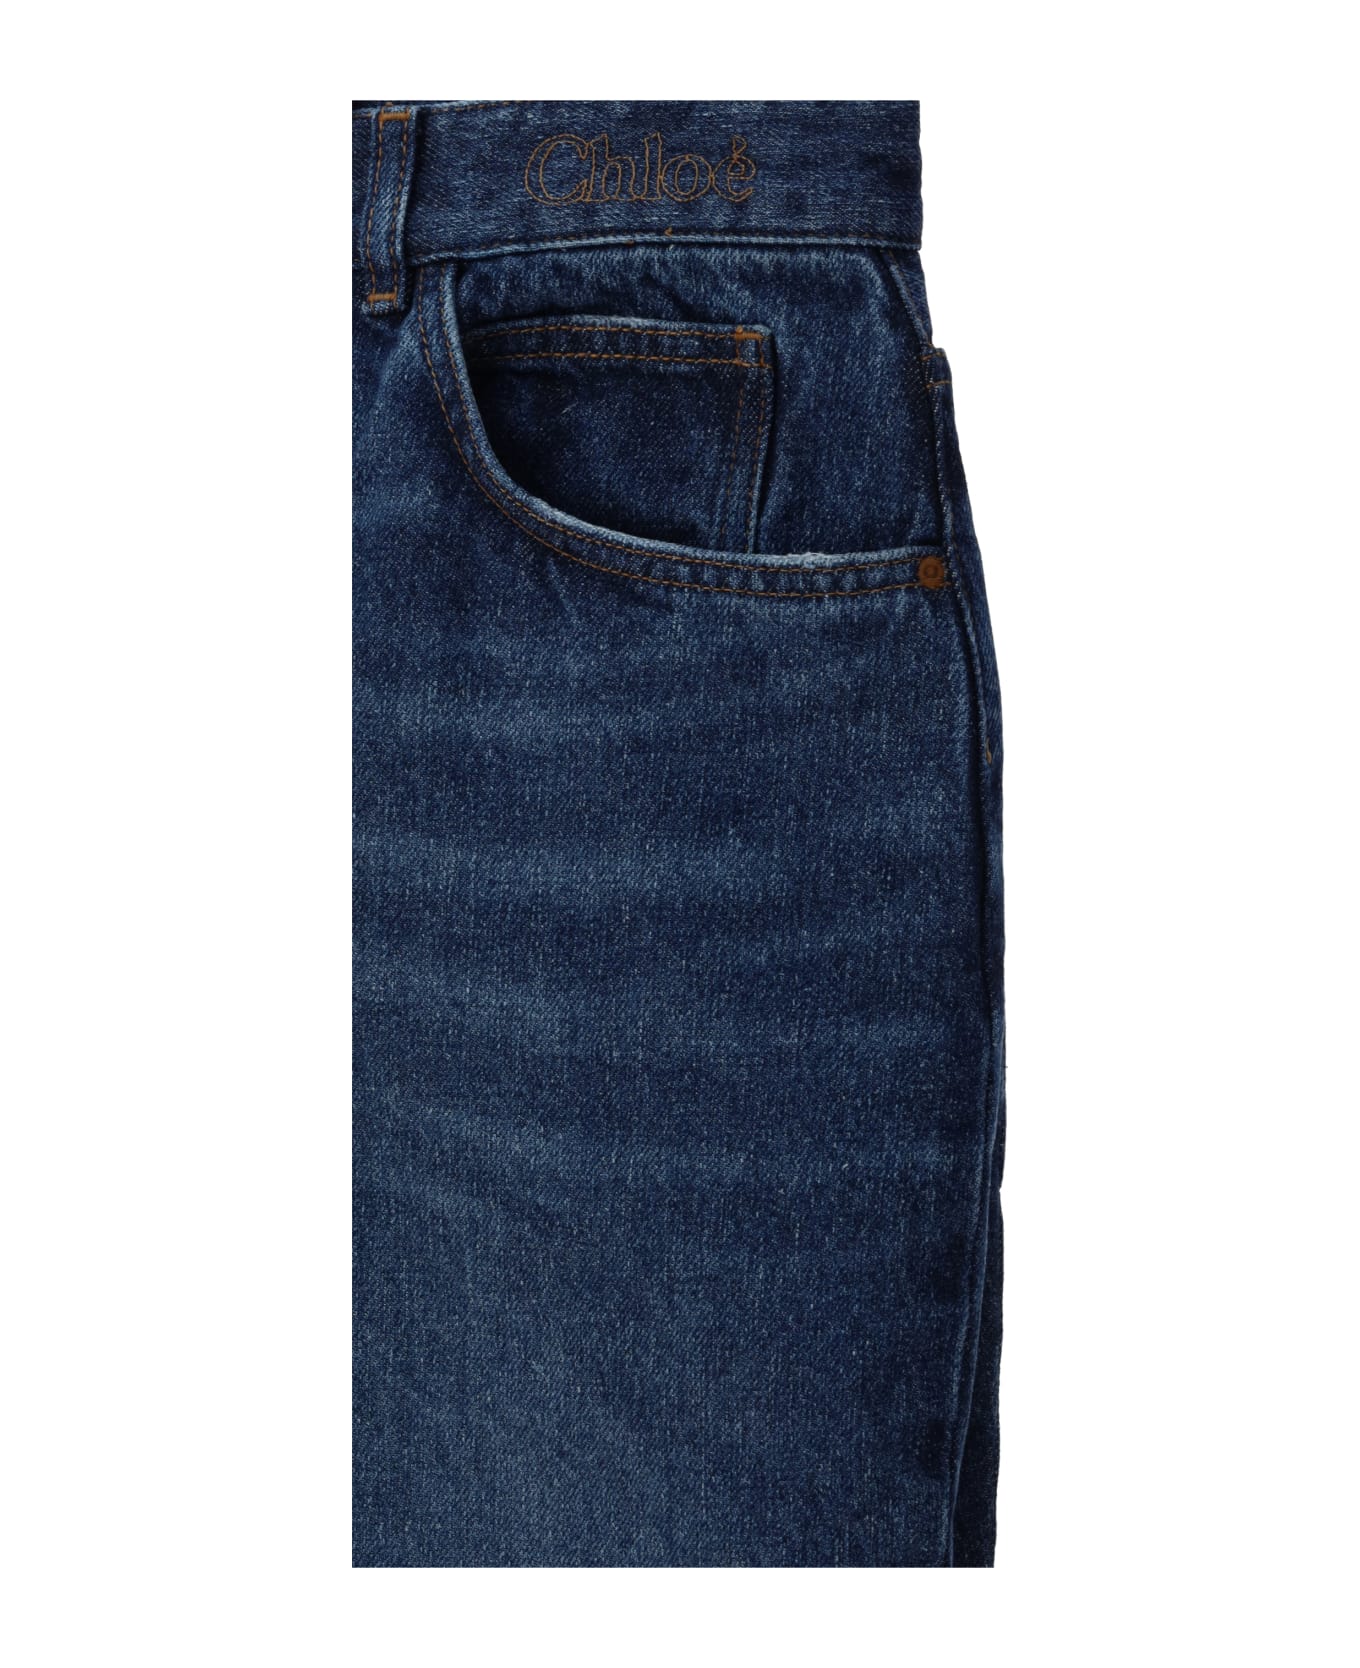 Chloé Chloè Merapi Cotton Denim Jeans - Faded Denim デニム